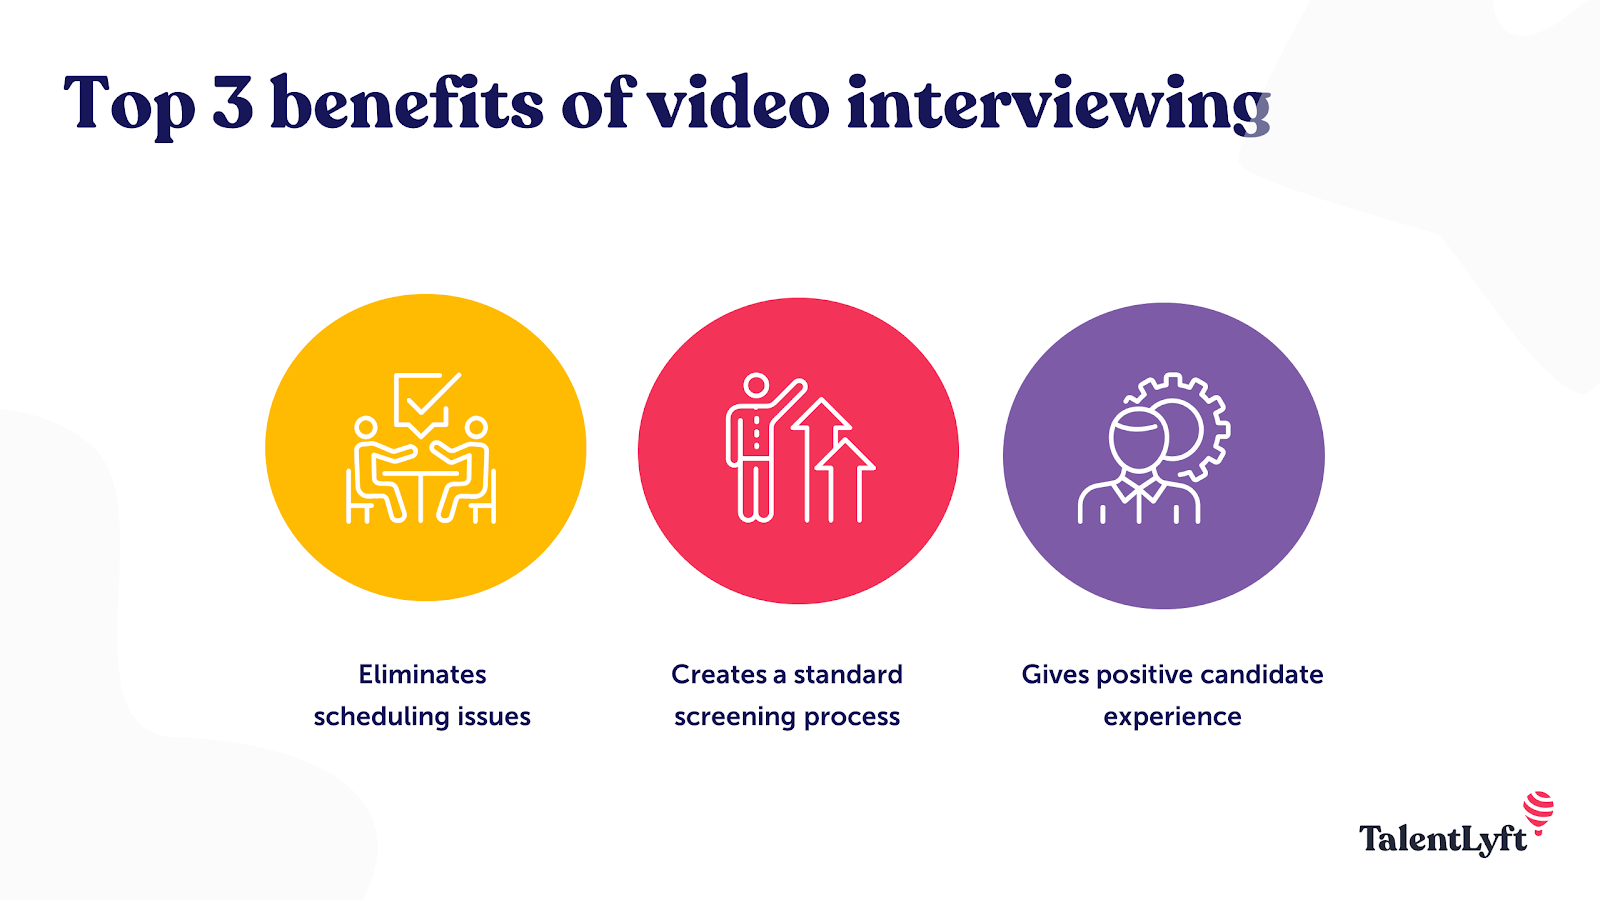 Video interviewing benefits